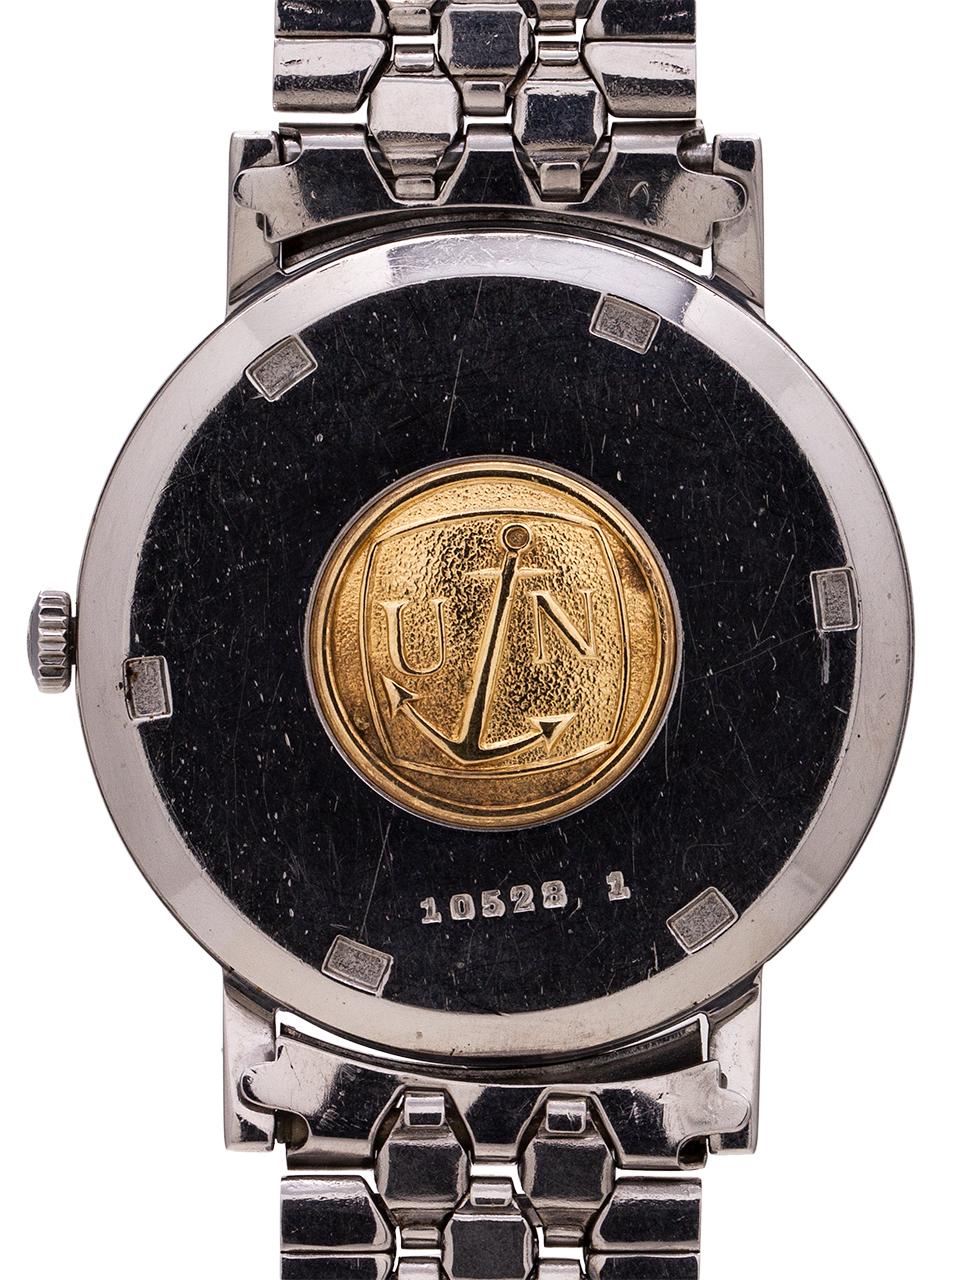 Ulysse Nardin Stainless Steel Automatic wristwatch Ref 10528/1, circa 1960s 3